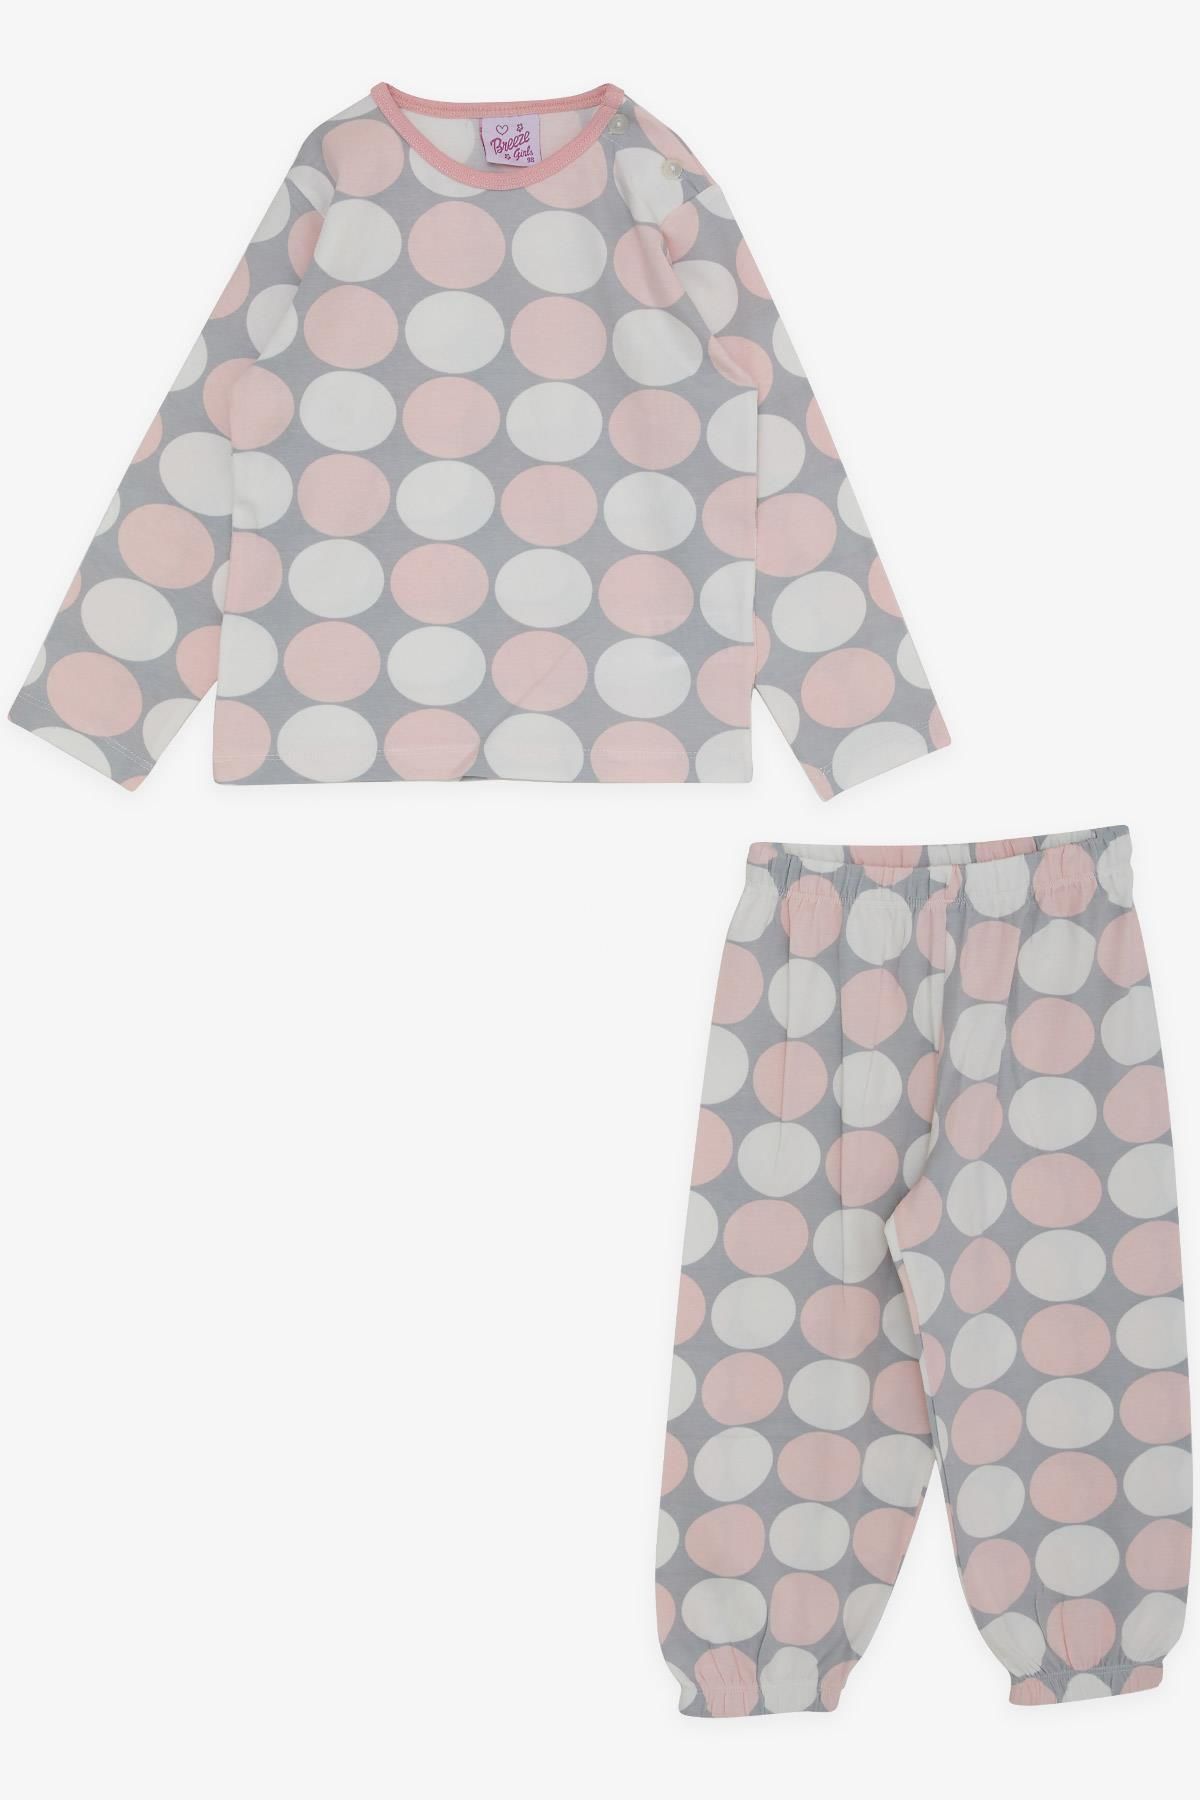 Breeze Kız Bebek Pijama Takımı Renkli Puan Desenli 9 Ay-3 Yaş, Gri